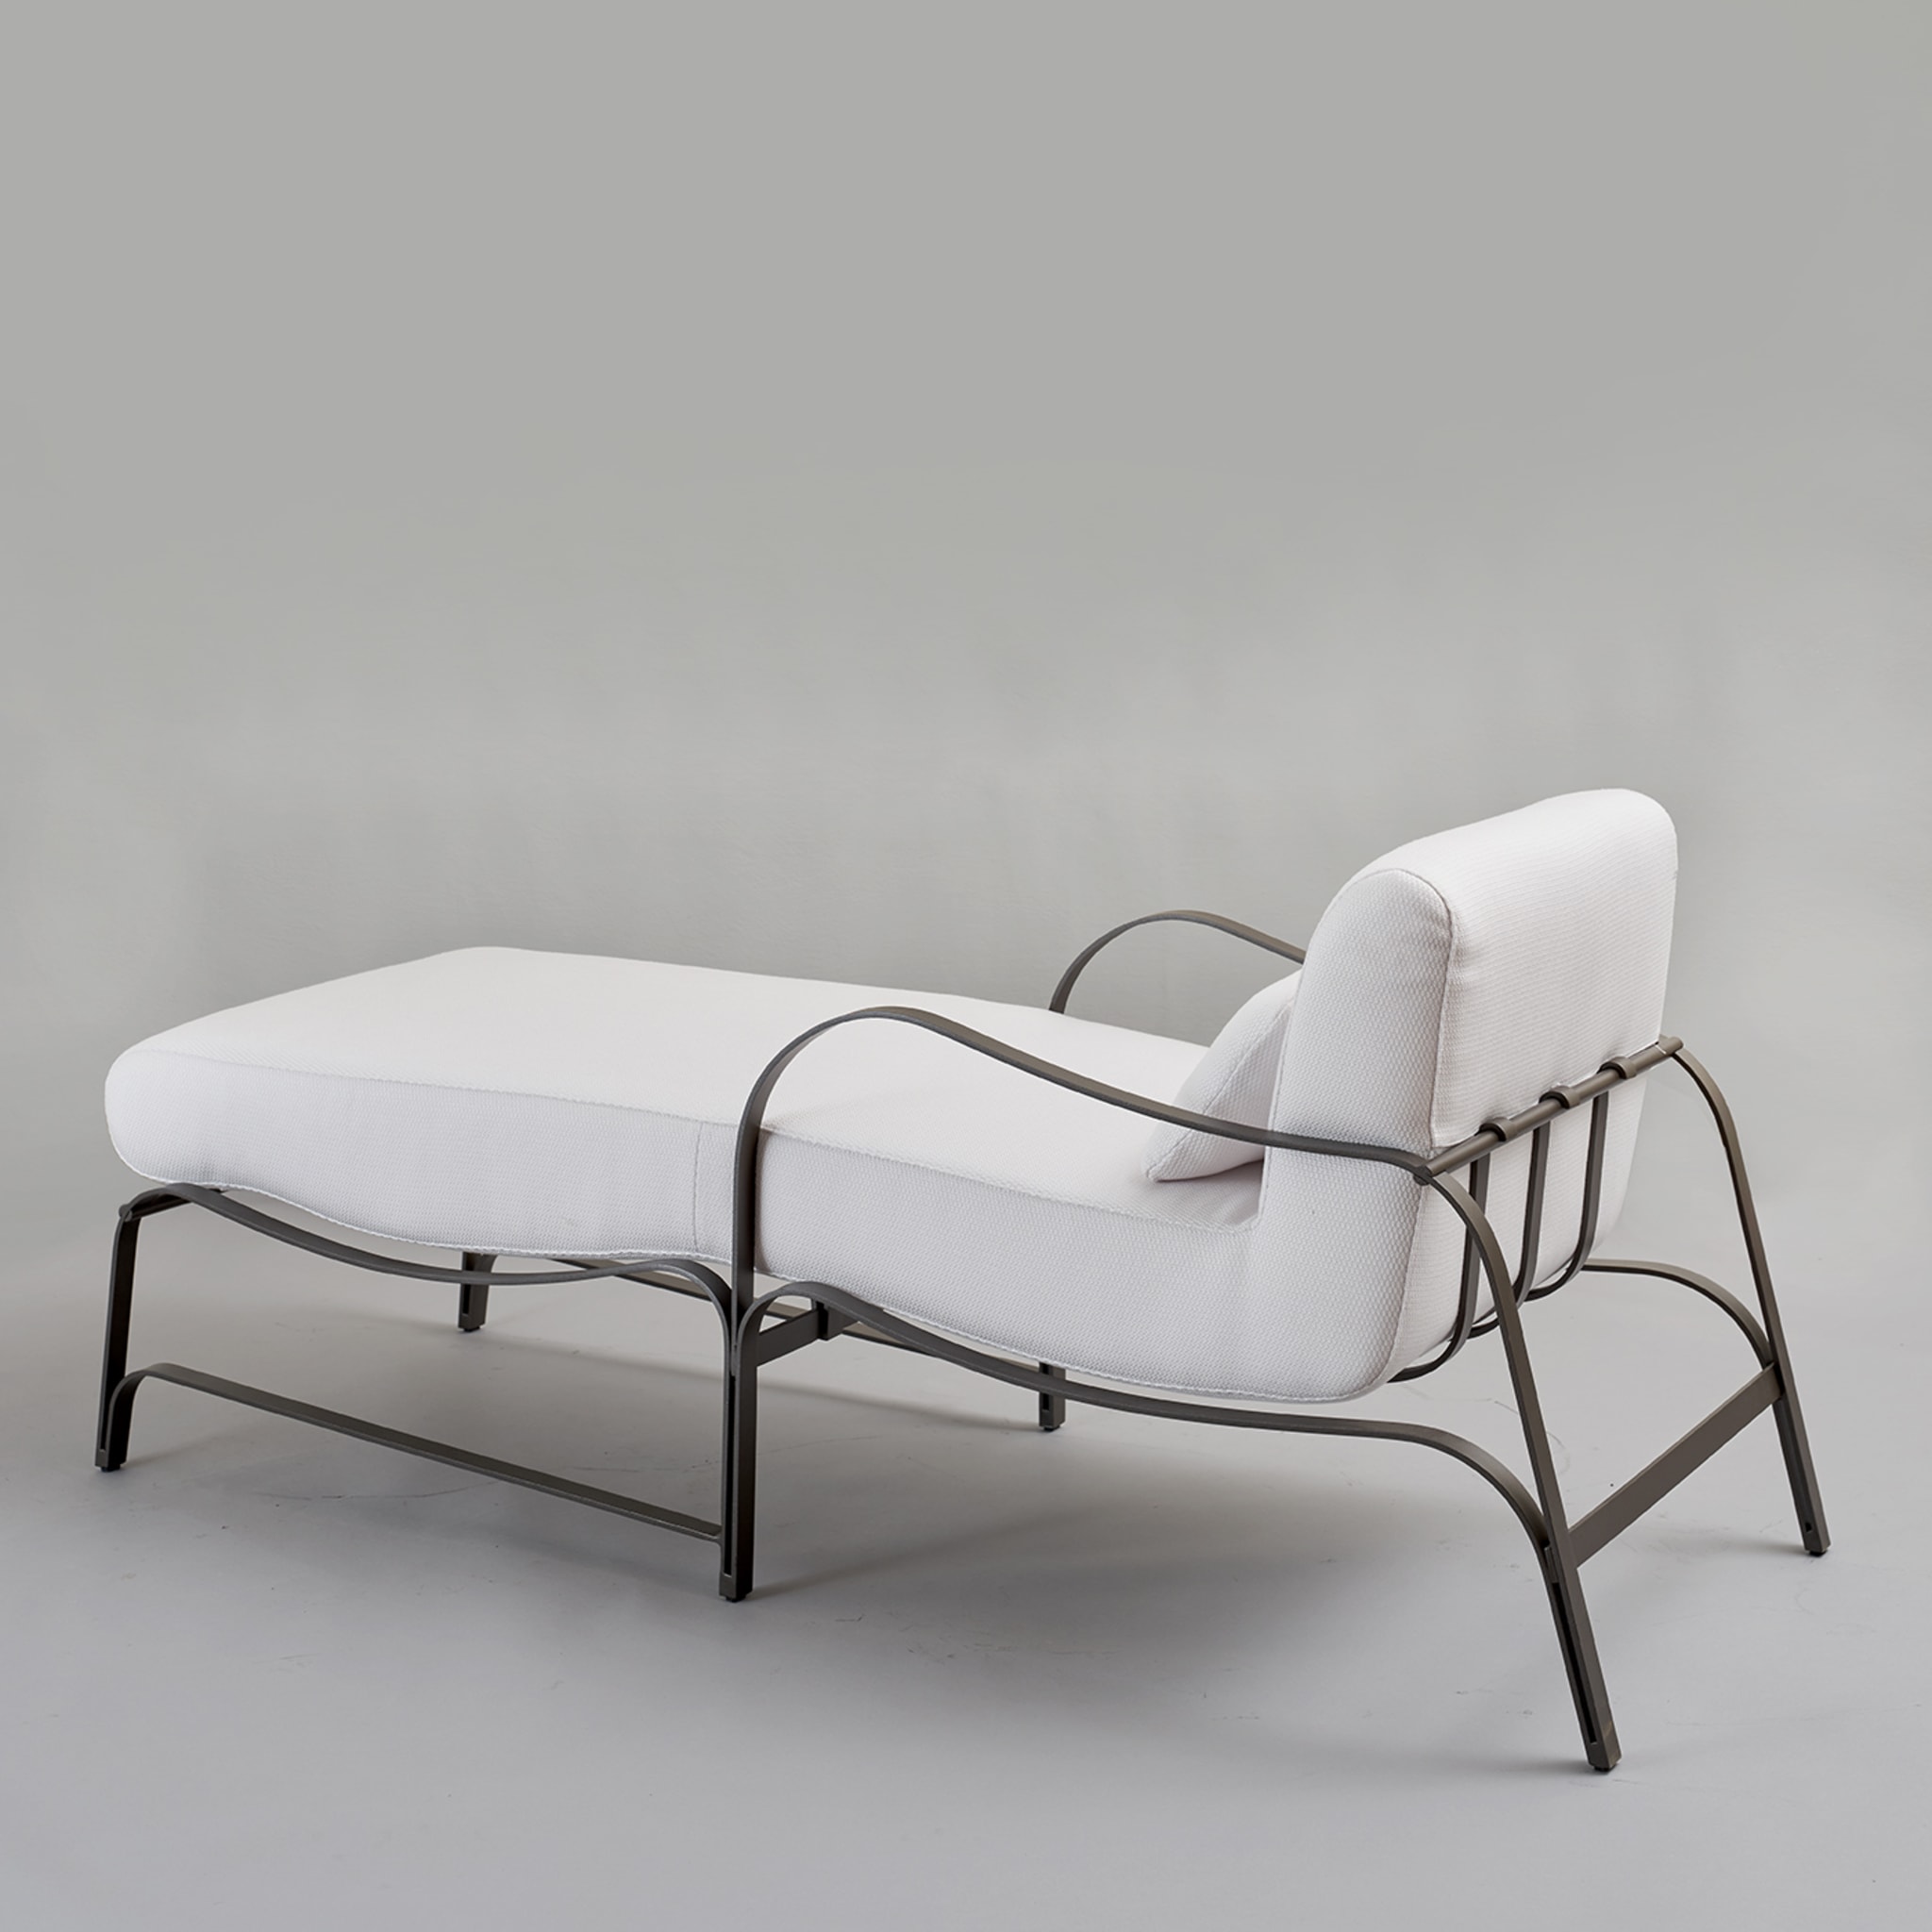 Amalfi White & Gray Chaise Longue by Studio 63  - Alternative view 2